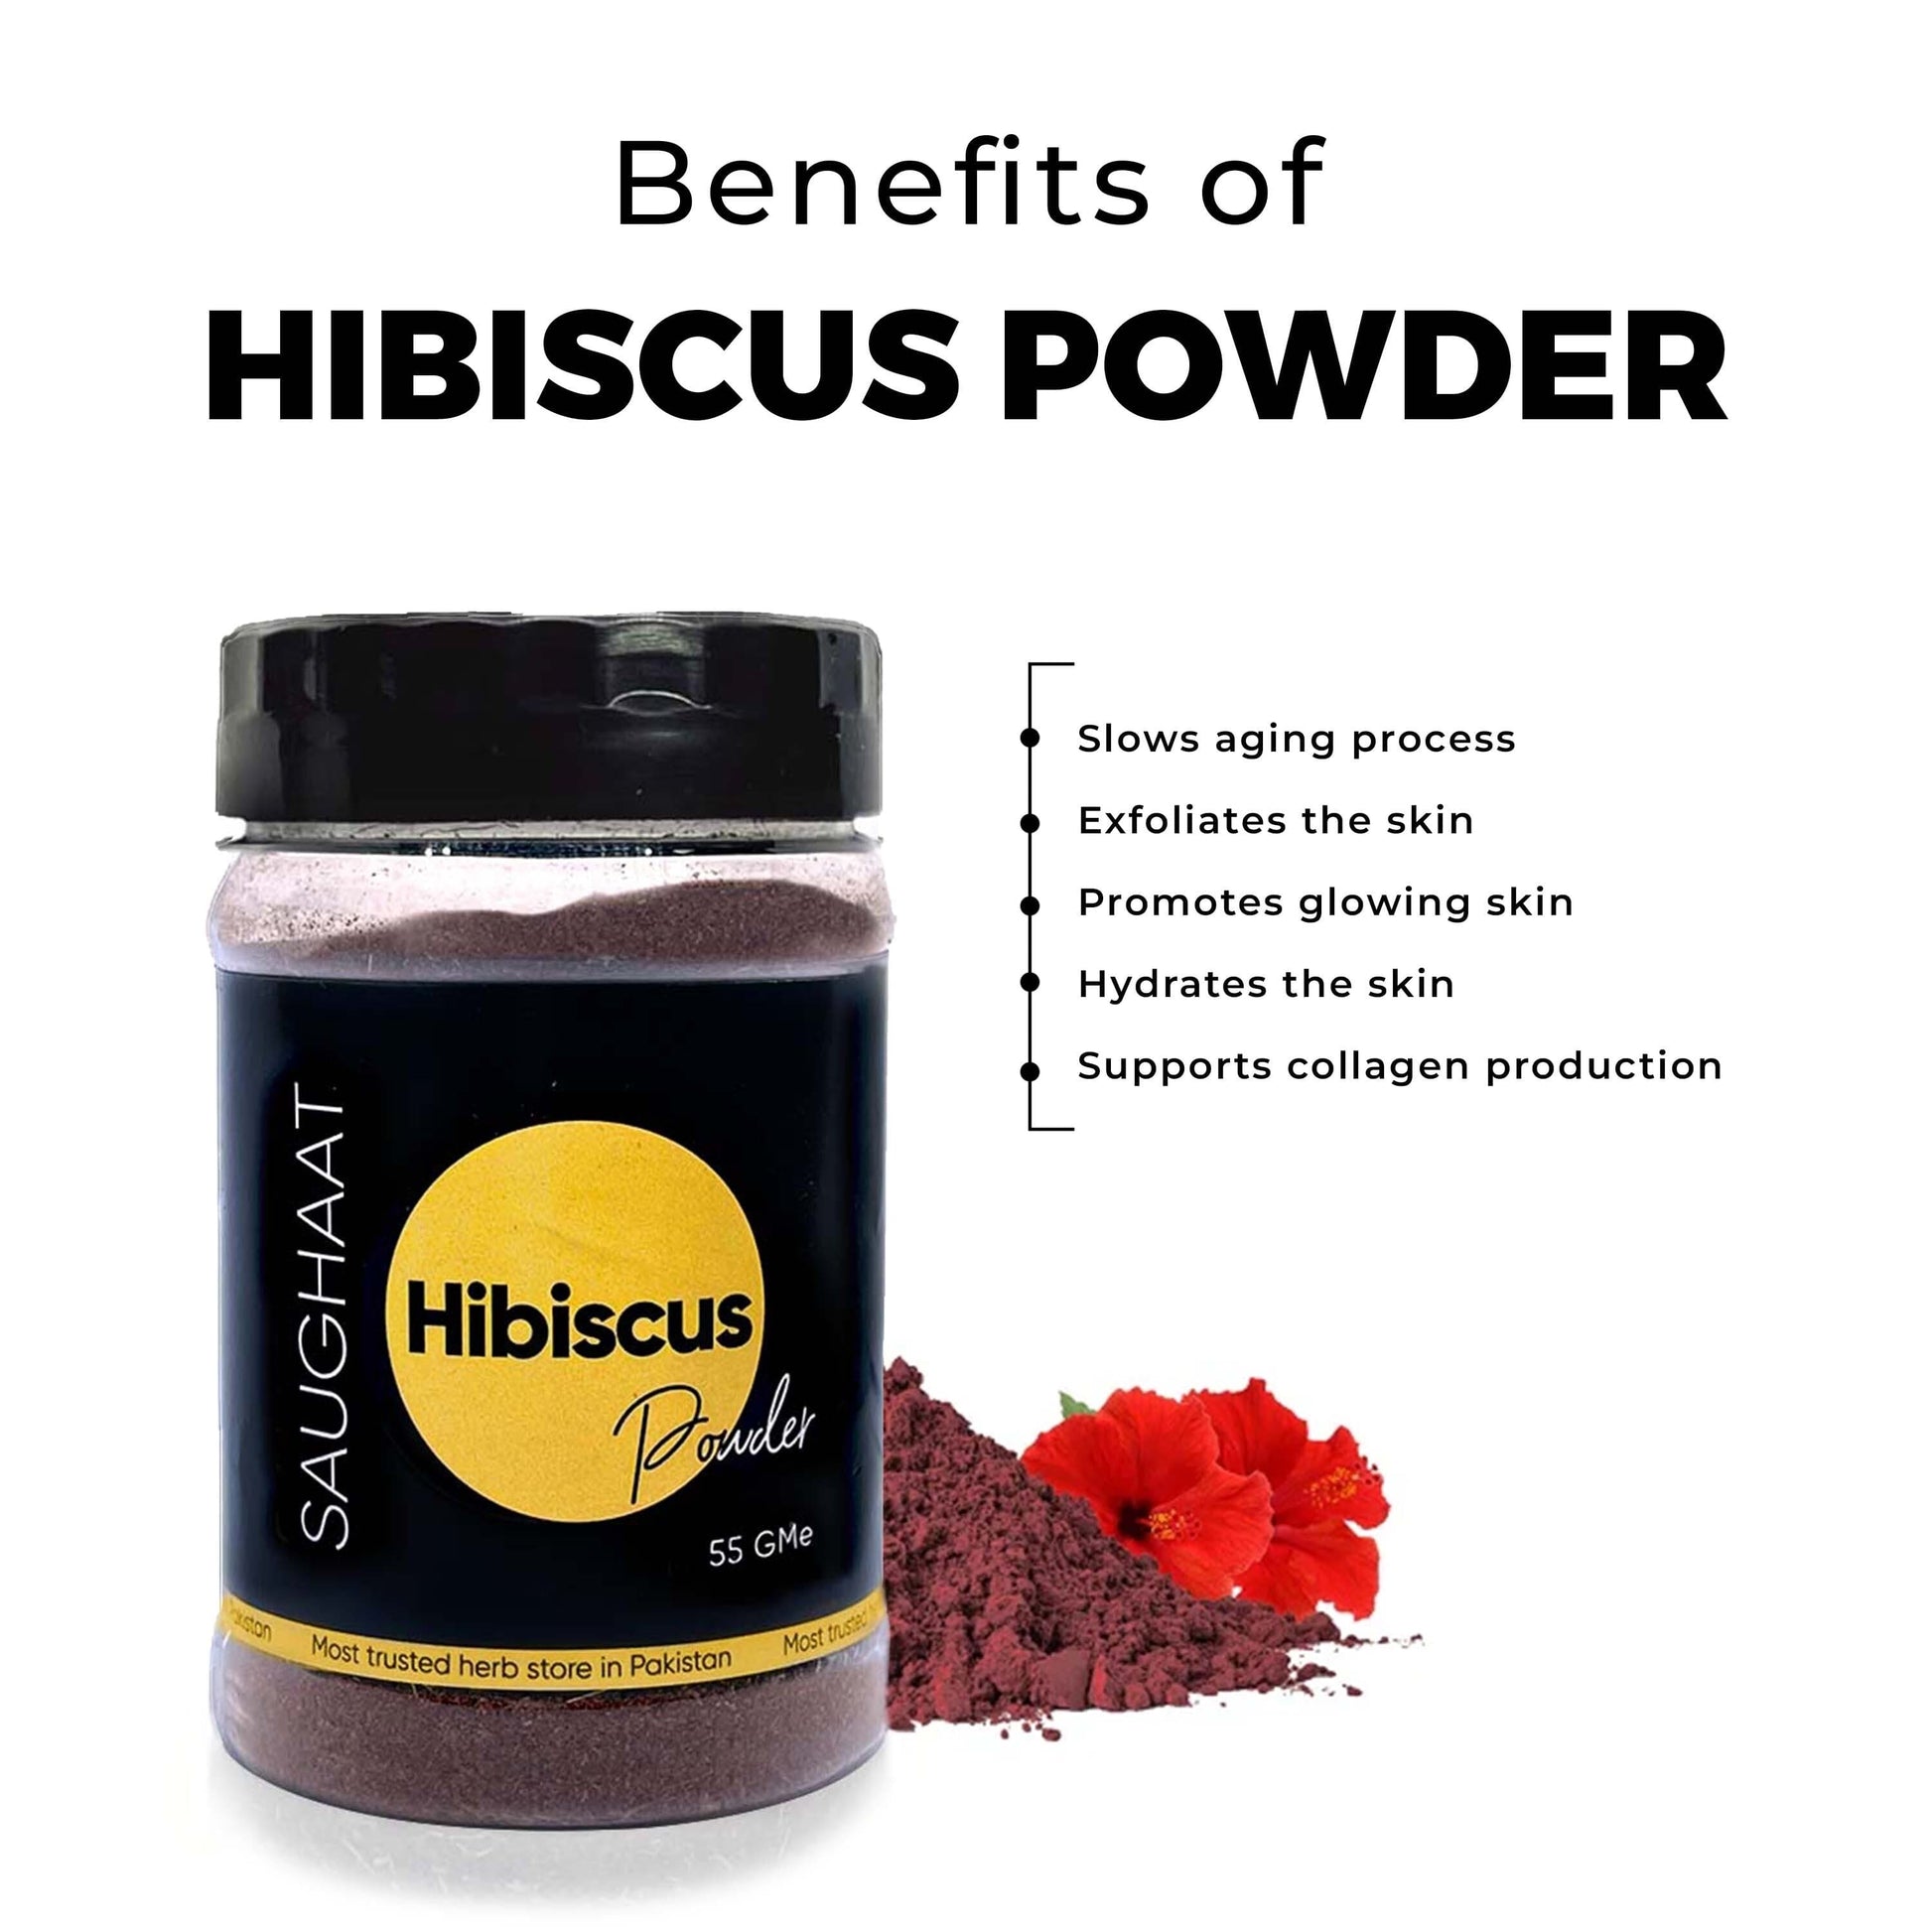 Benefits of Hibiscus Powder